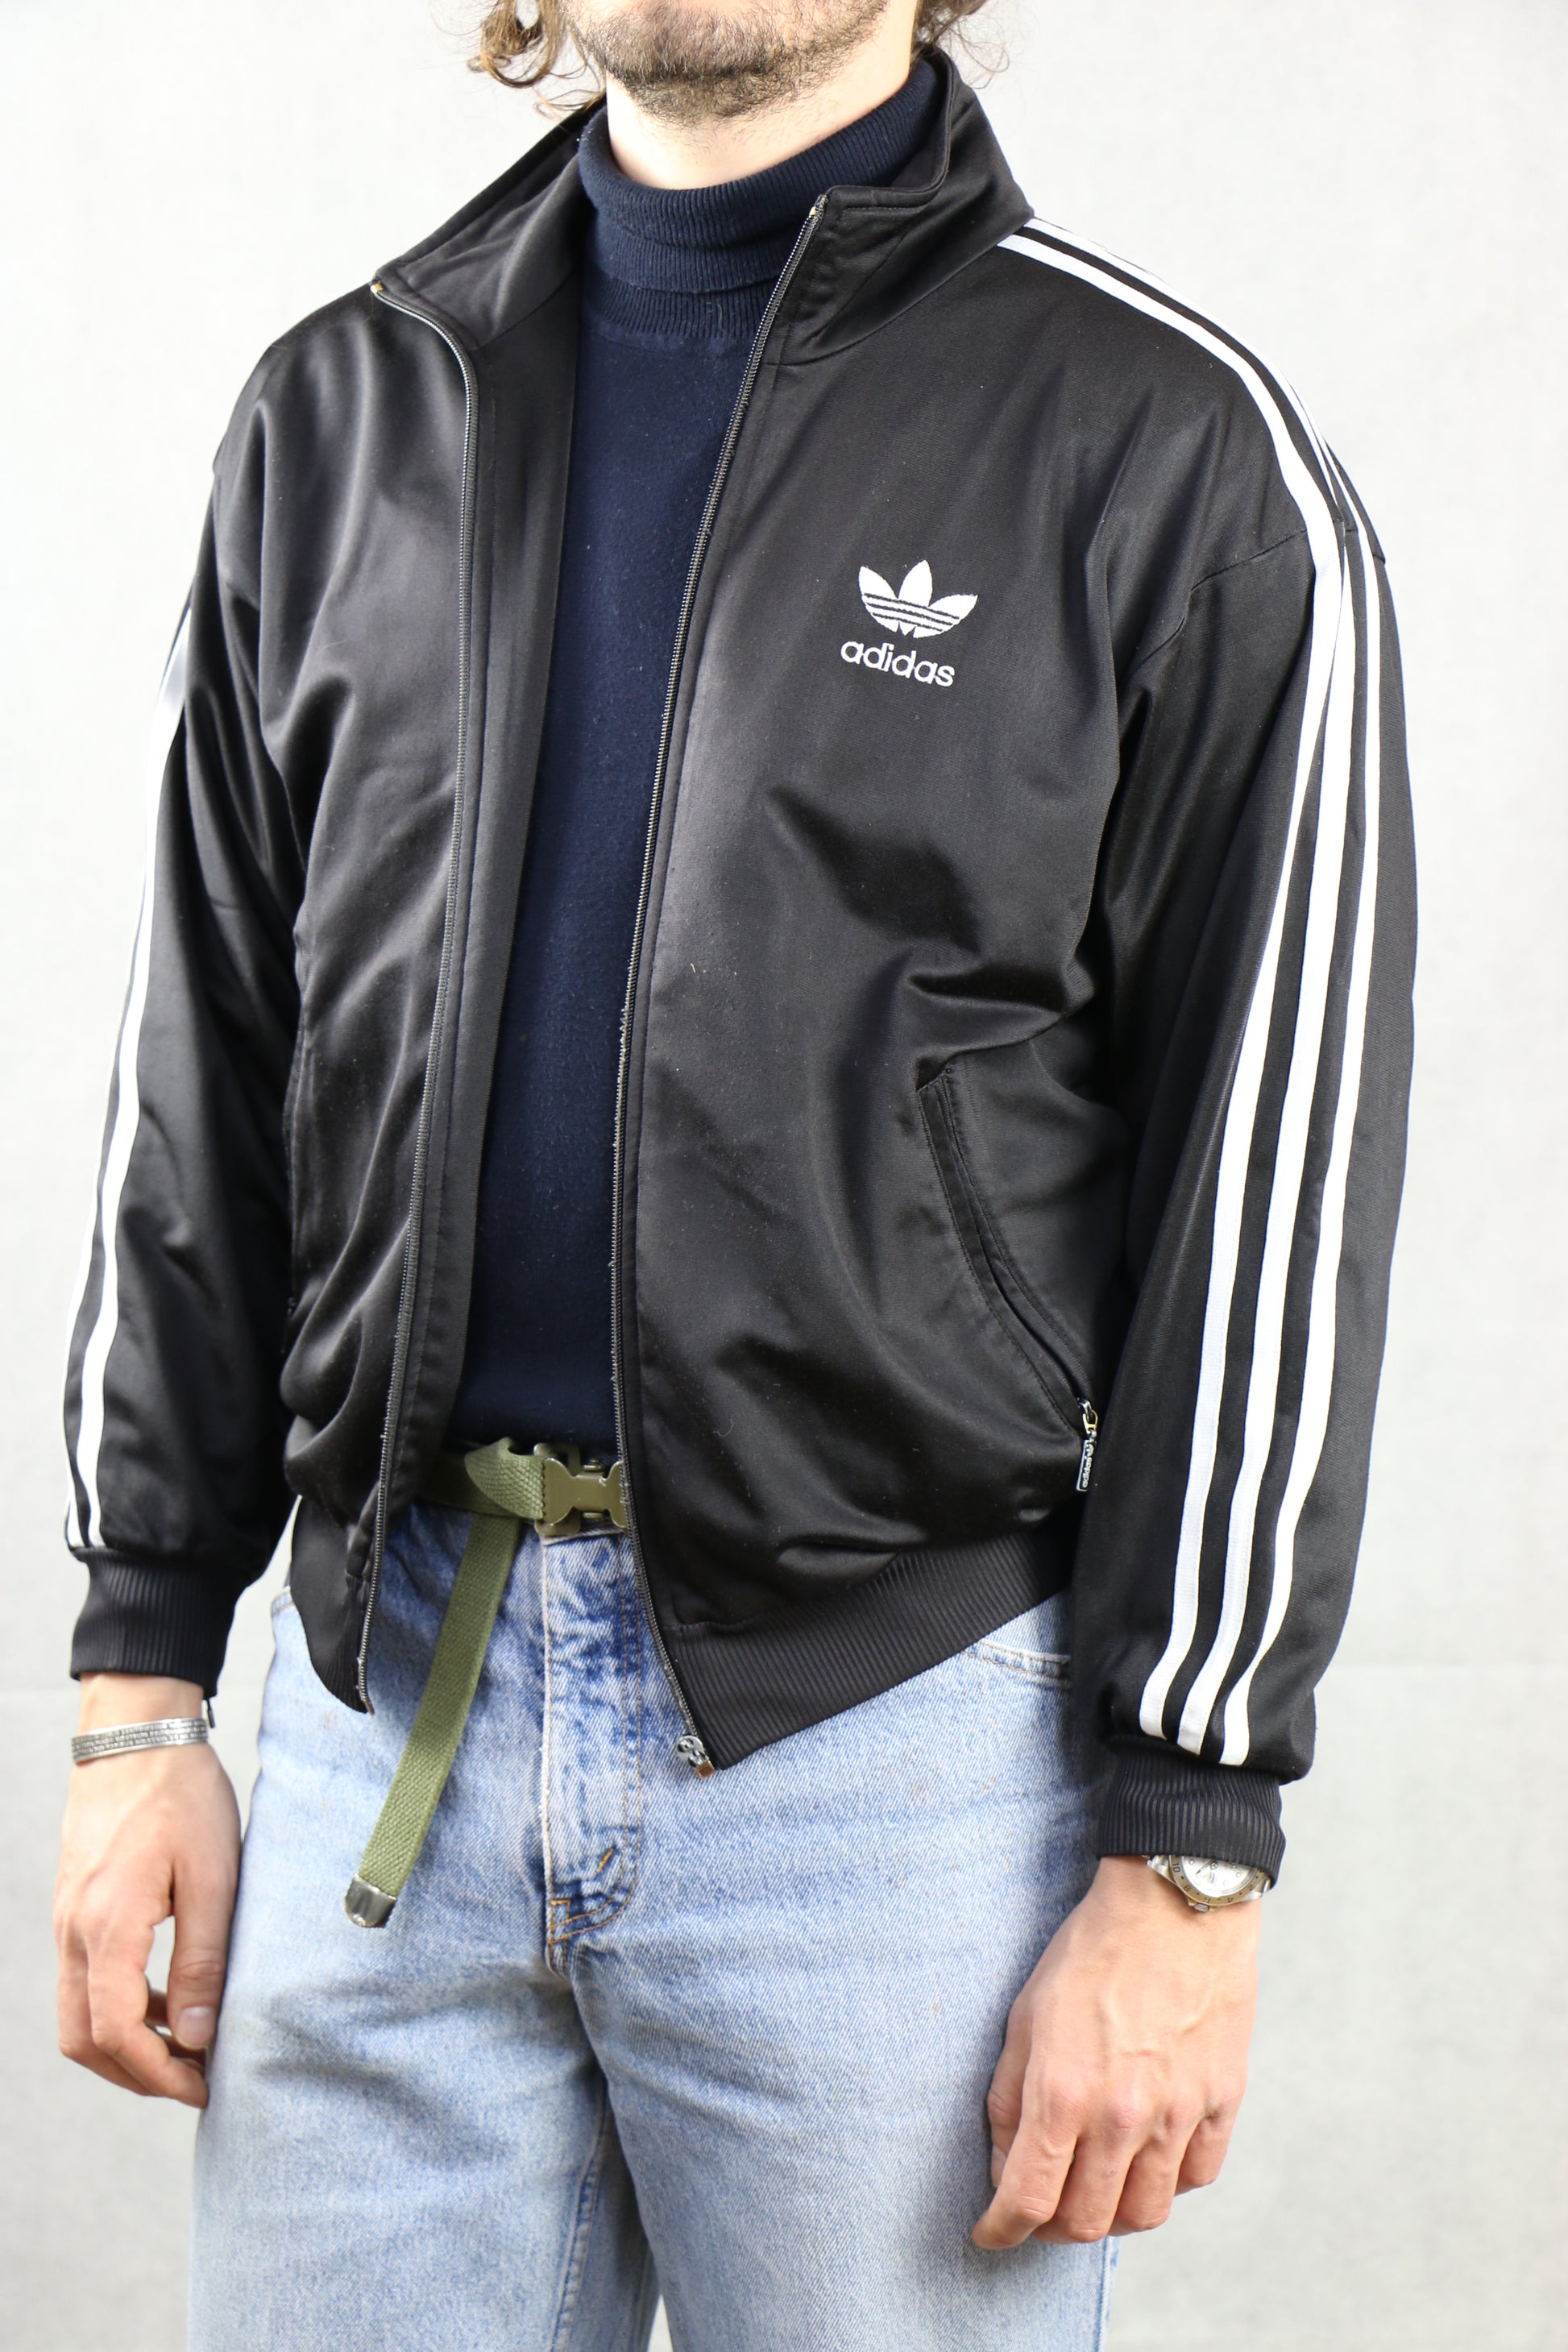 Adidas Black Track Jacket - vintage clothing clochard92.com